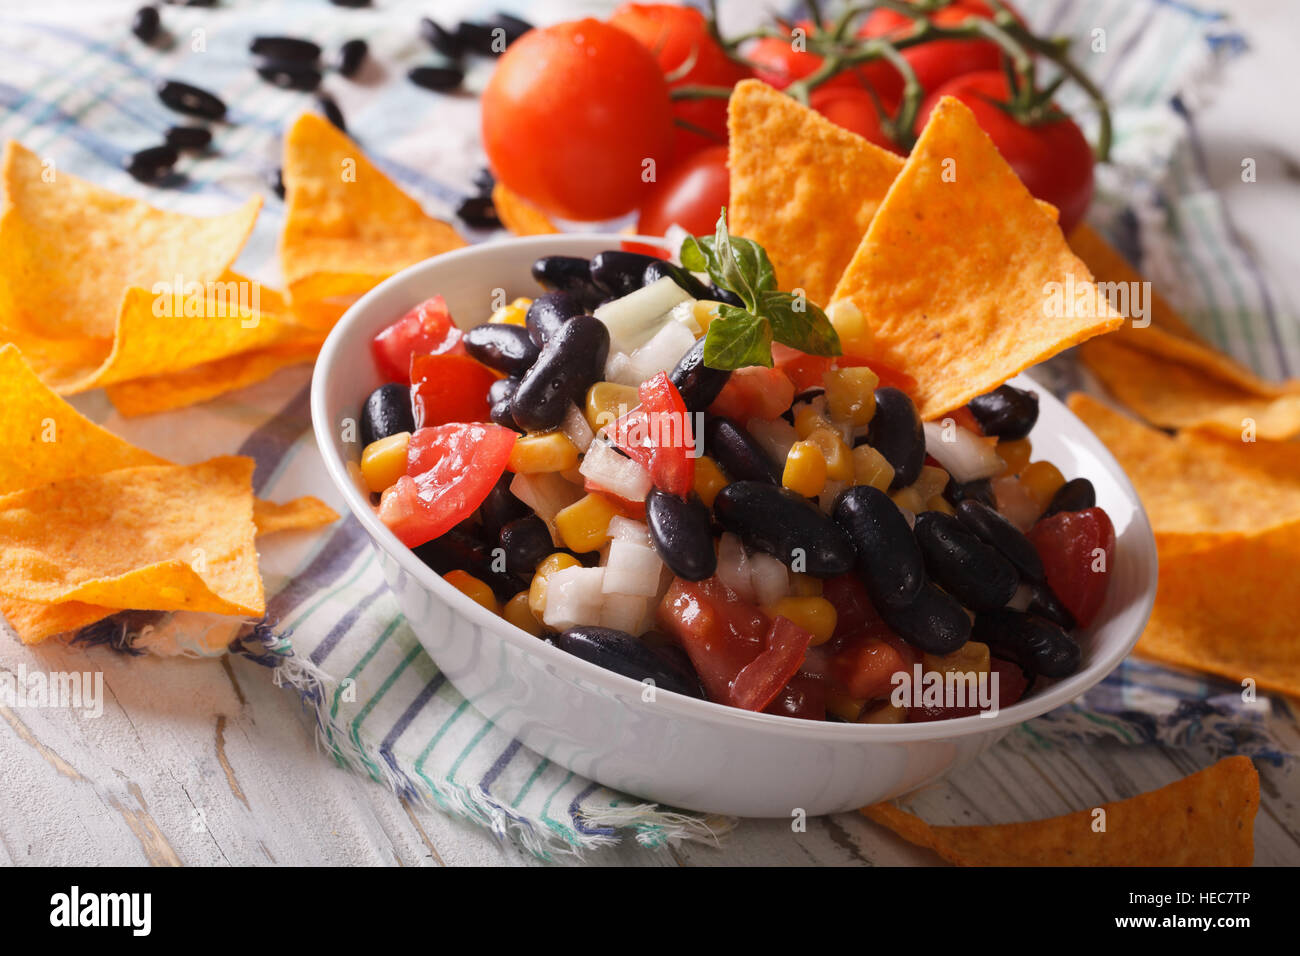 Mexican ethnic food -Fotos und -Bildmaterial in hoher Auflösung – Alamy